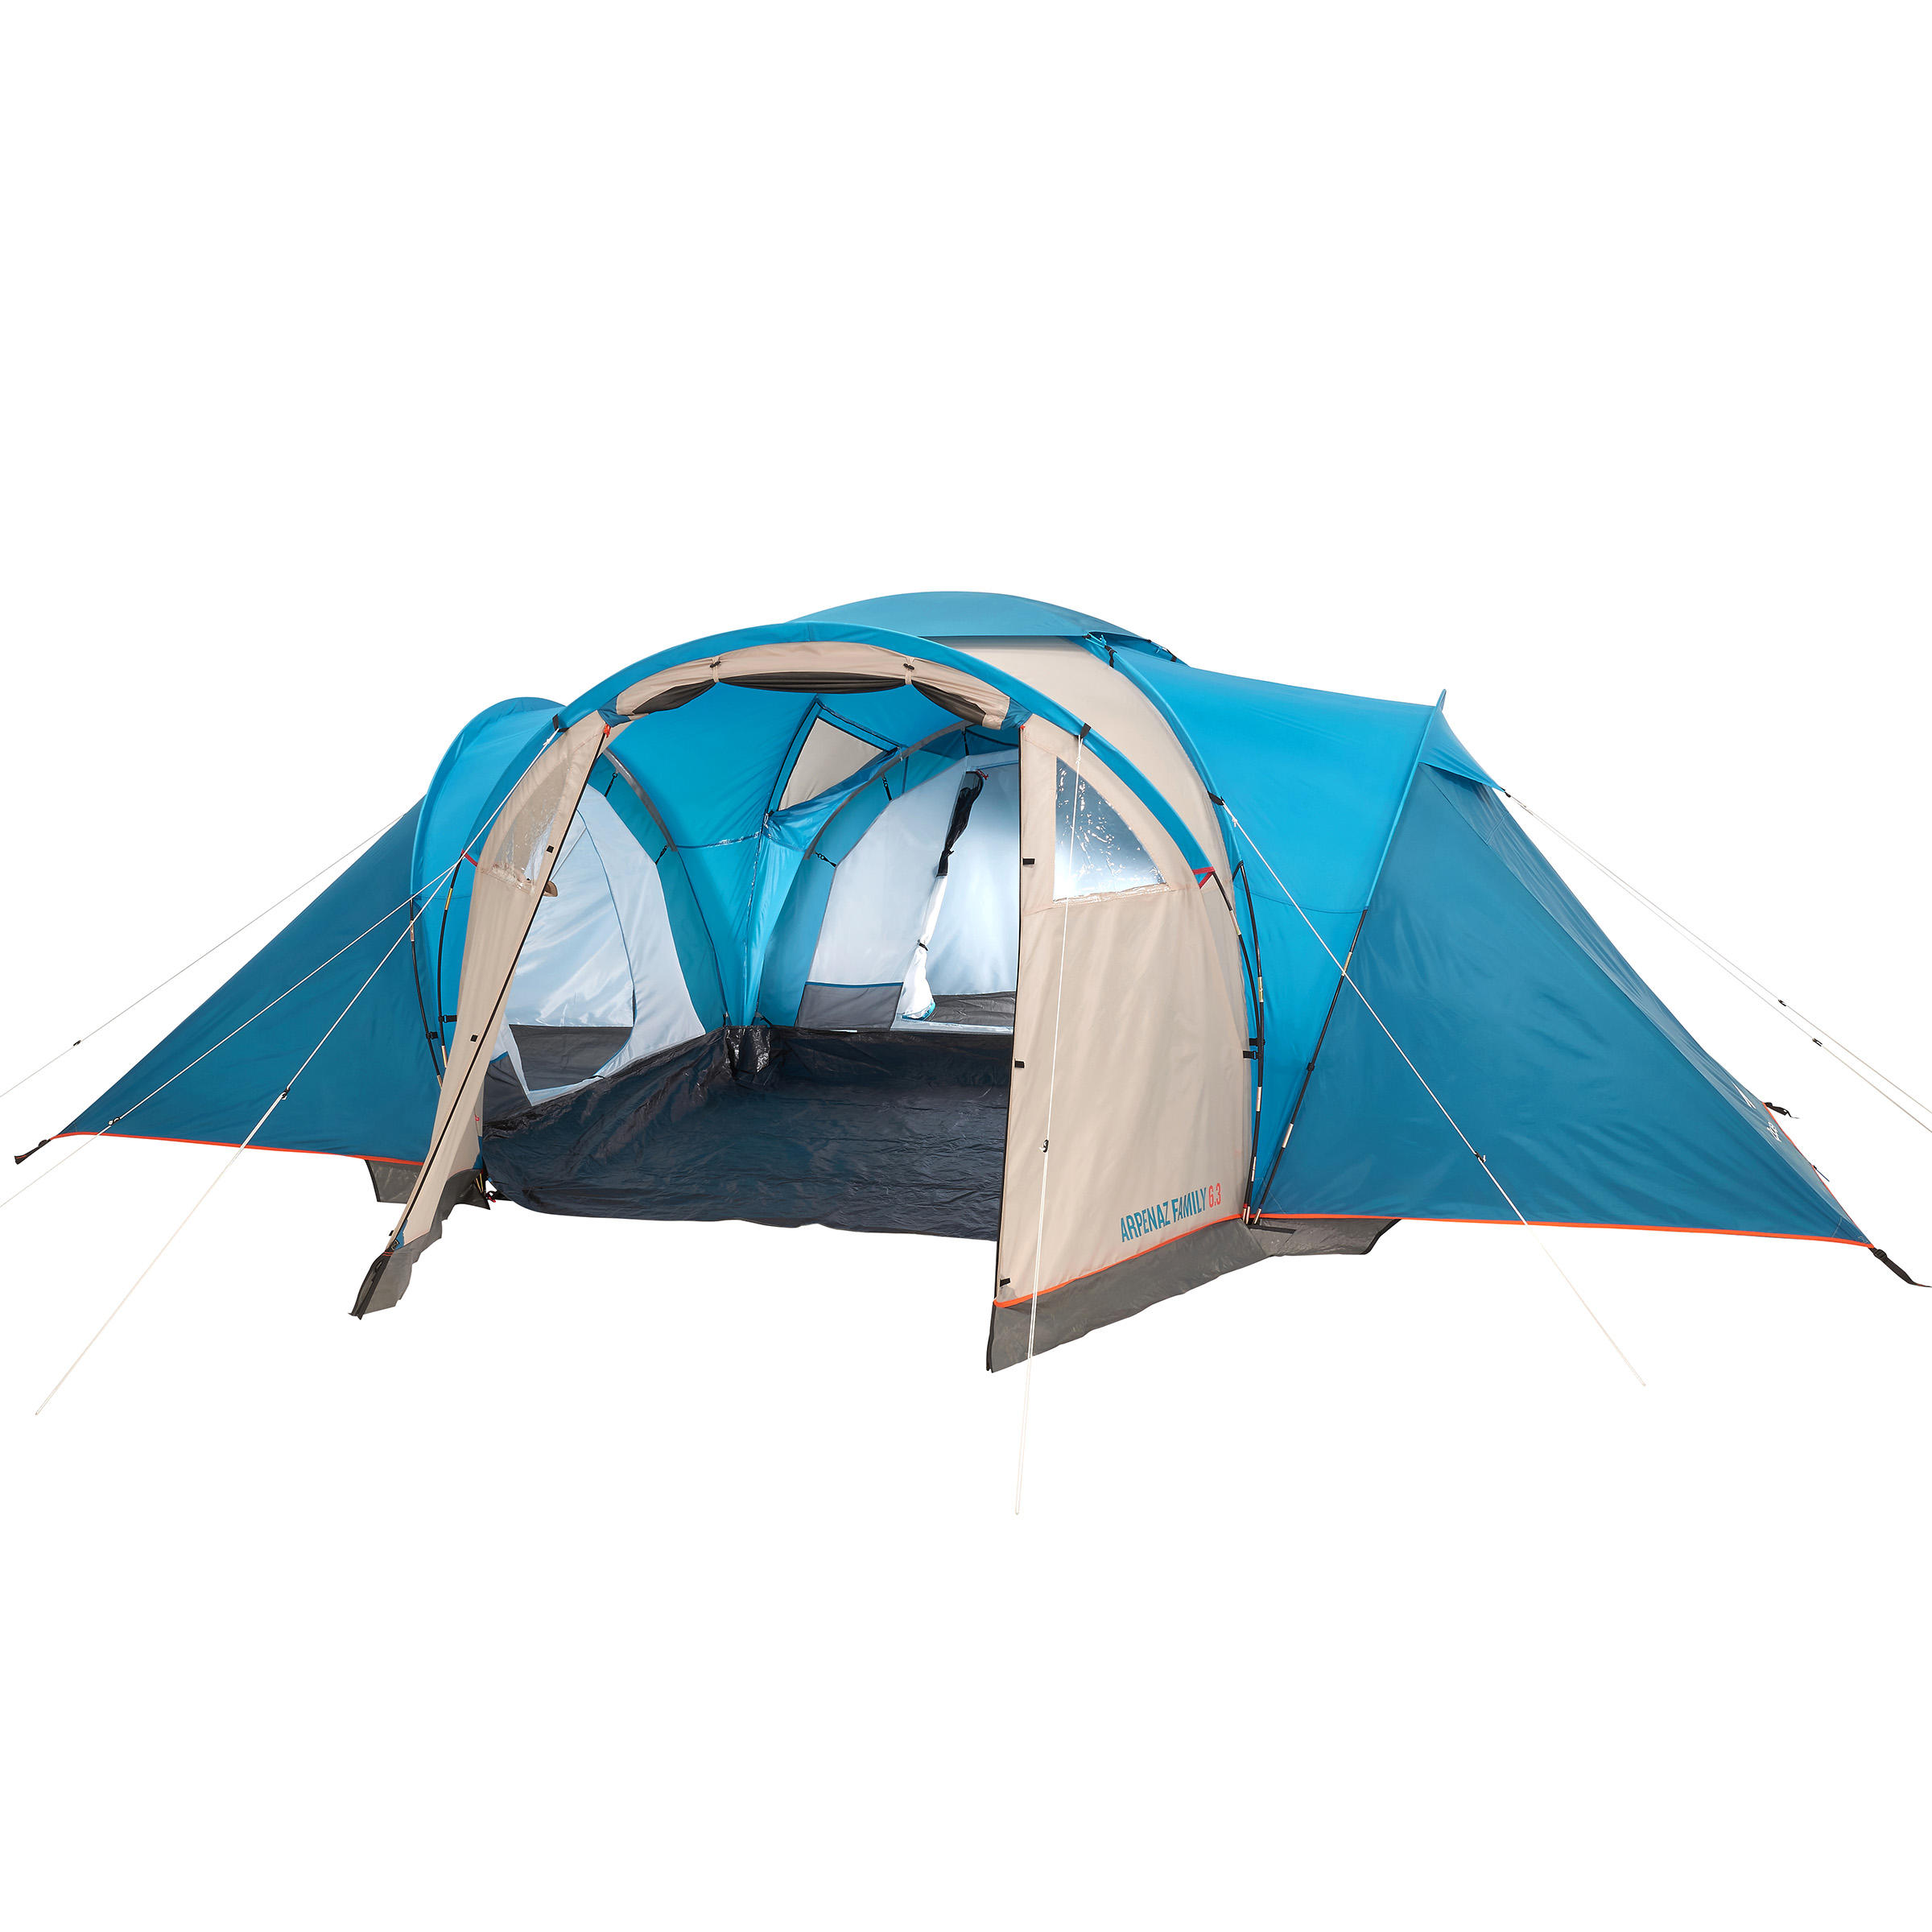 Camping hoop tent - Arpenaz 6.3 - 6 